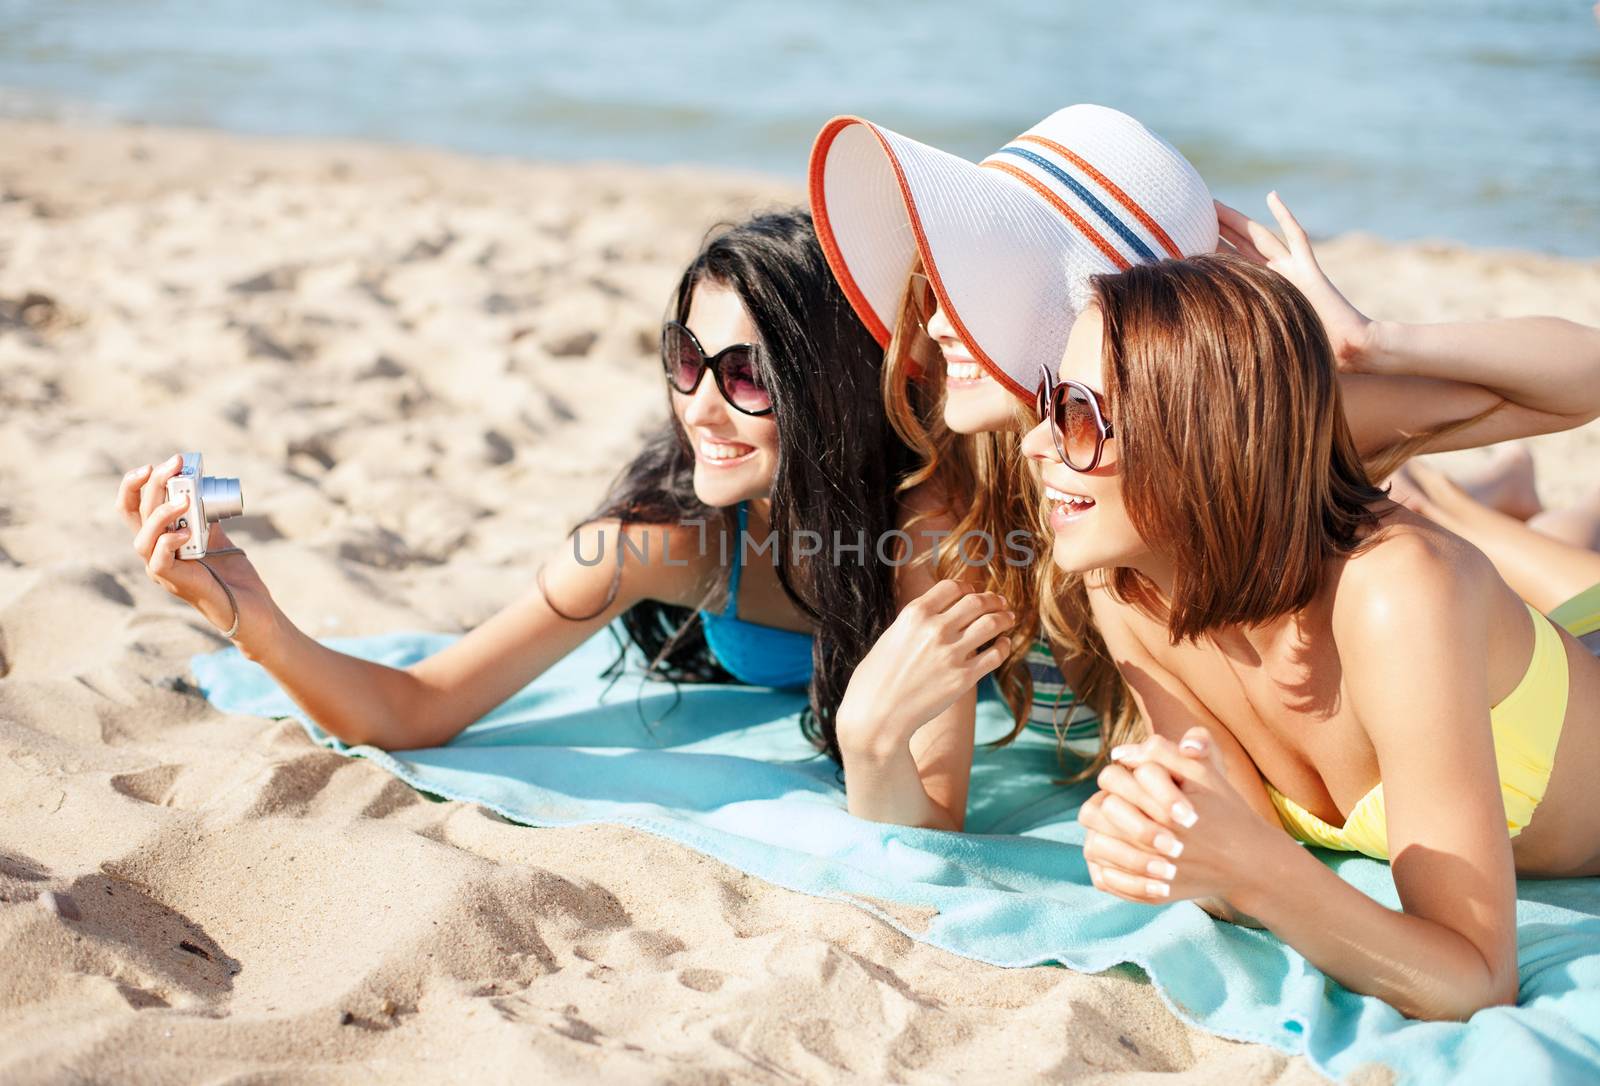 girls making self portrait on the beach by dolgachov